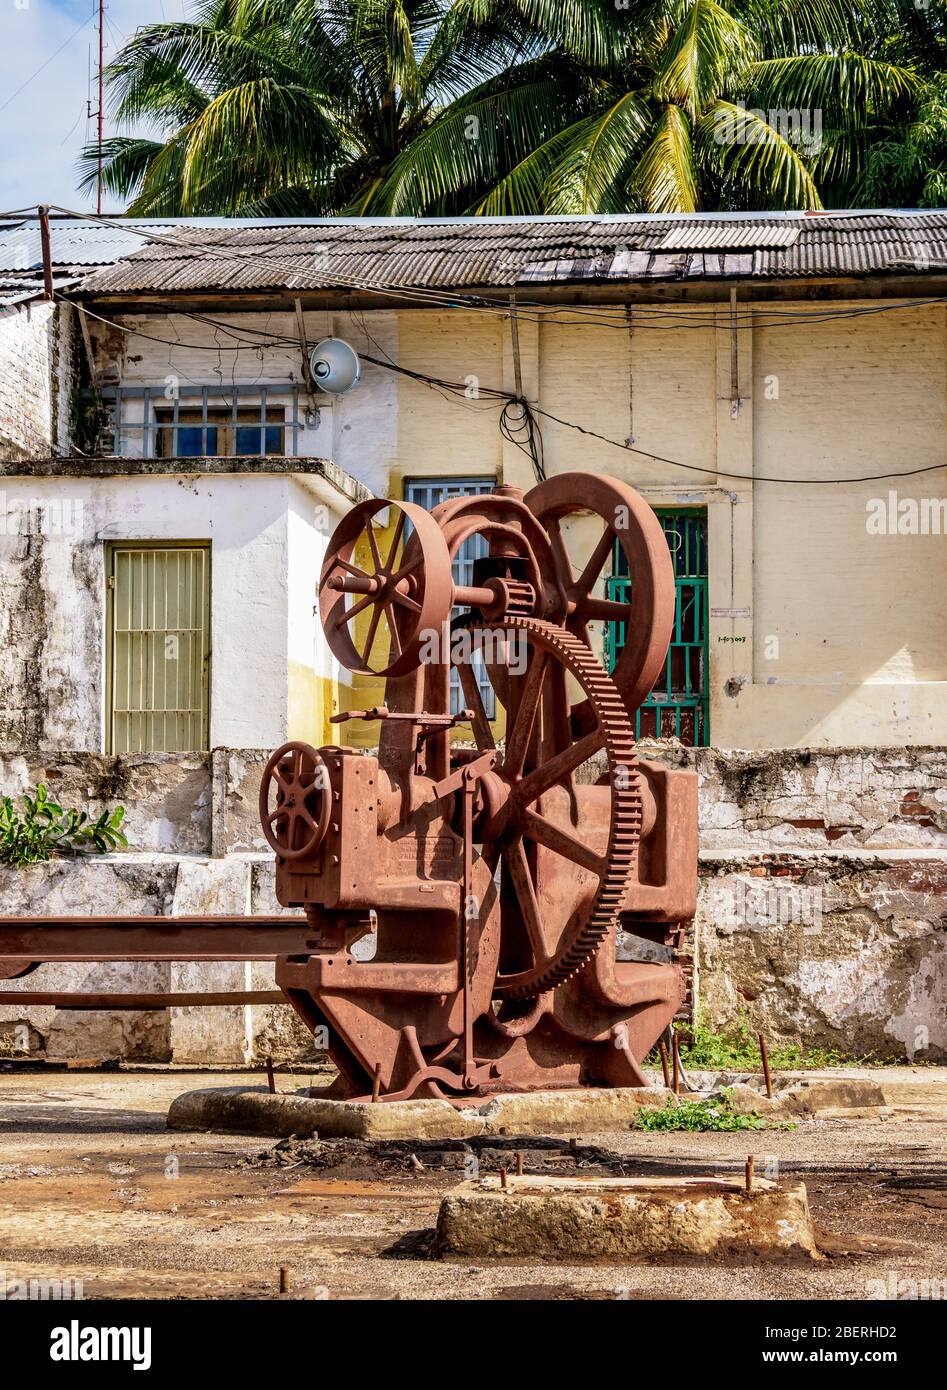 FNTA Sugar Mill Valley Museum, detailed view, Valle de los Ingenios, Sancti Spiritus Province, Cuba Stock Photo